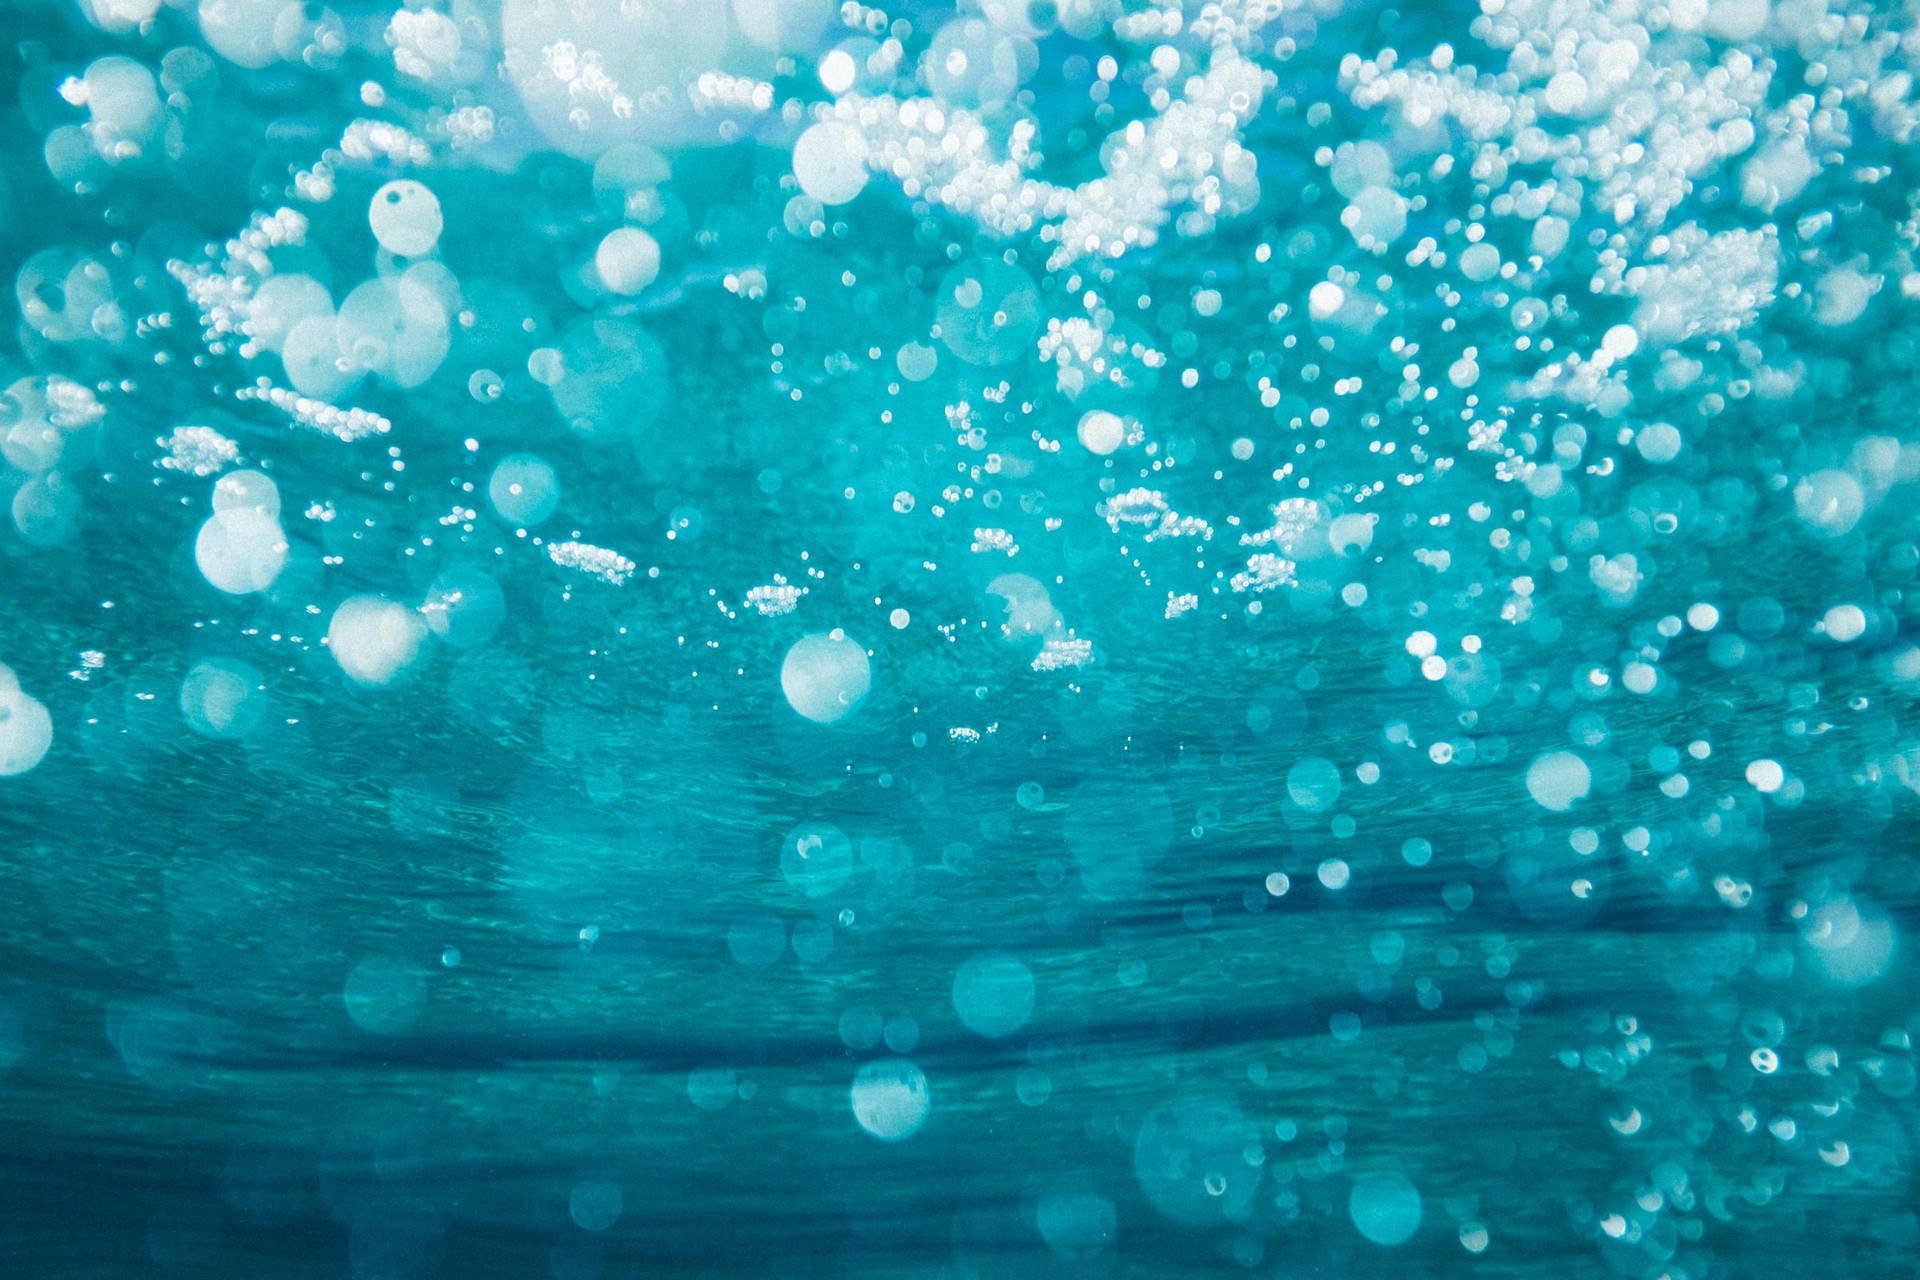 Bubbles In Ocean Blue Waters Background